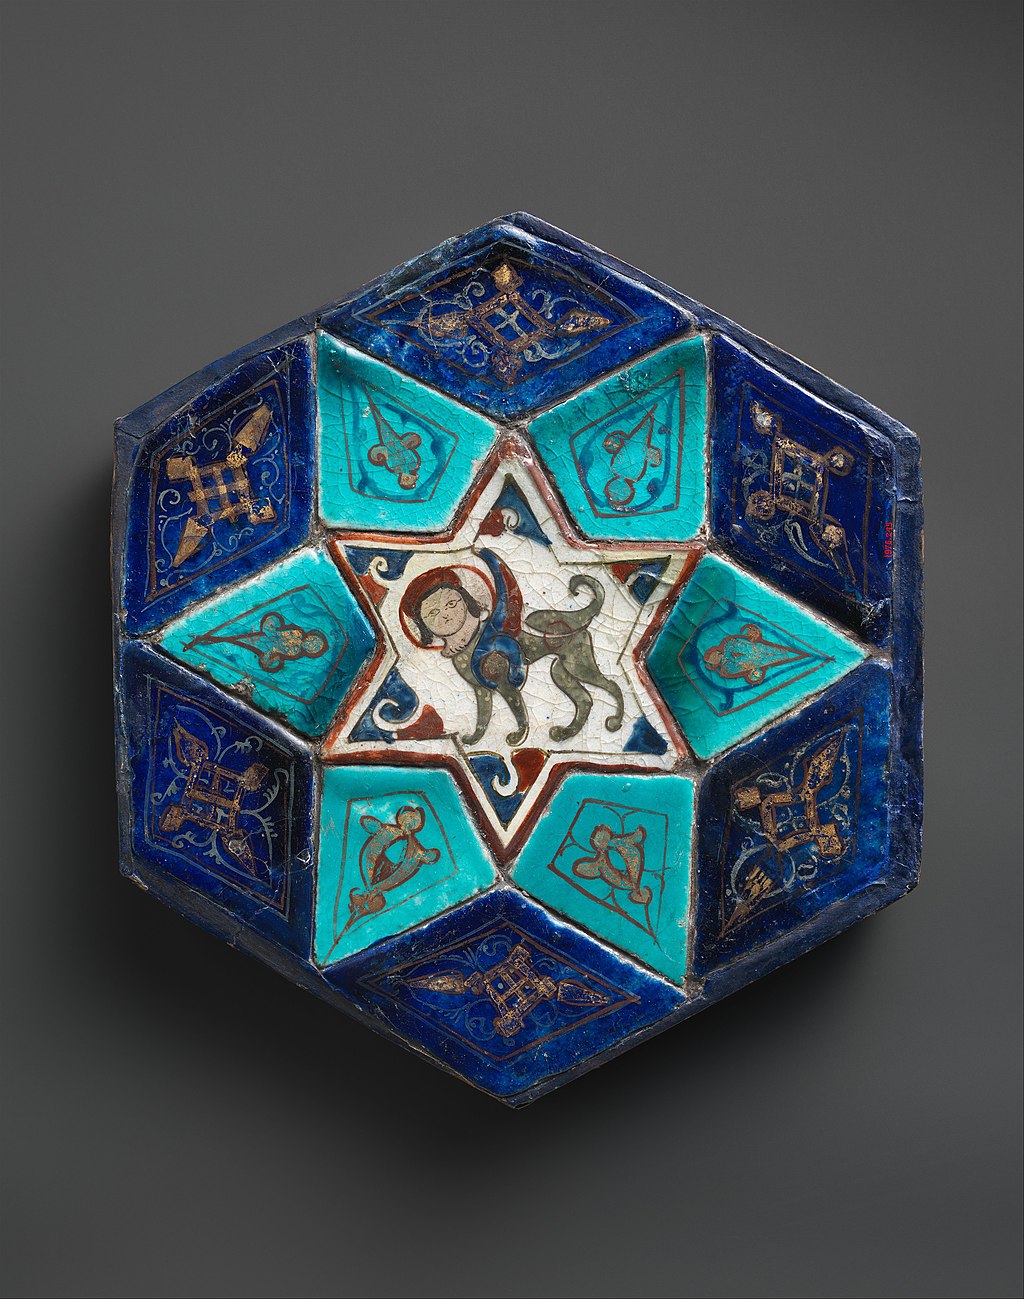 Seljuk of Rum period (1081-1307): 12th century hexagonal tile from Konya, Turkey (source: Wikimedia Commons; Metropolitan Museum of Art)